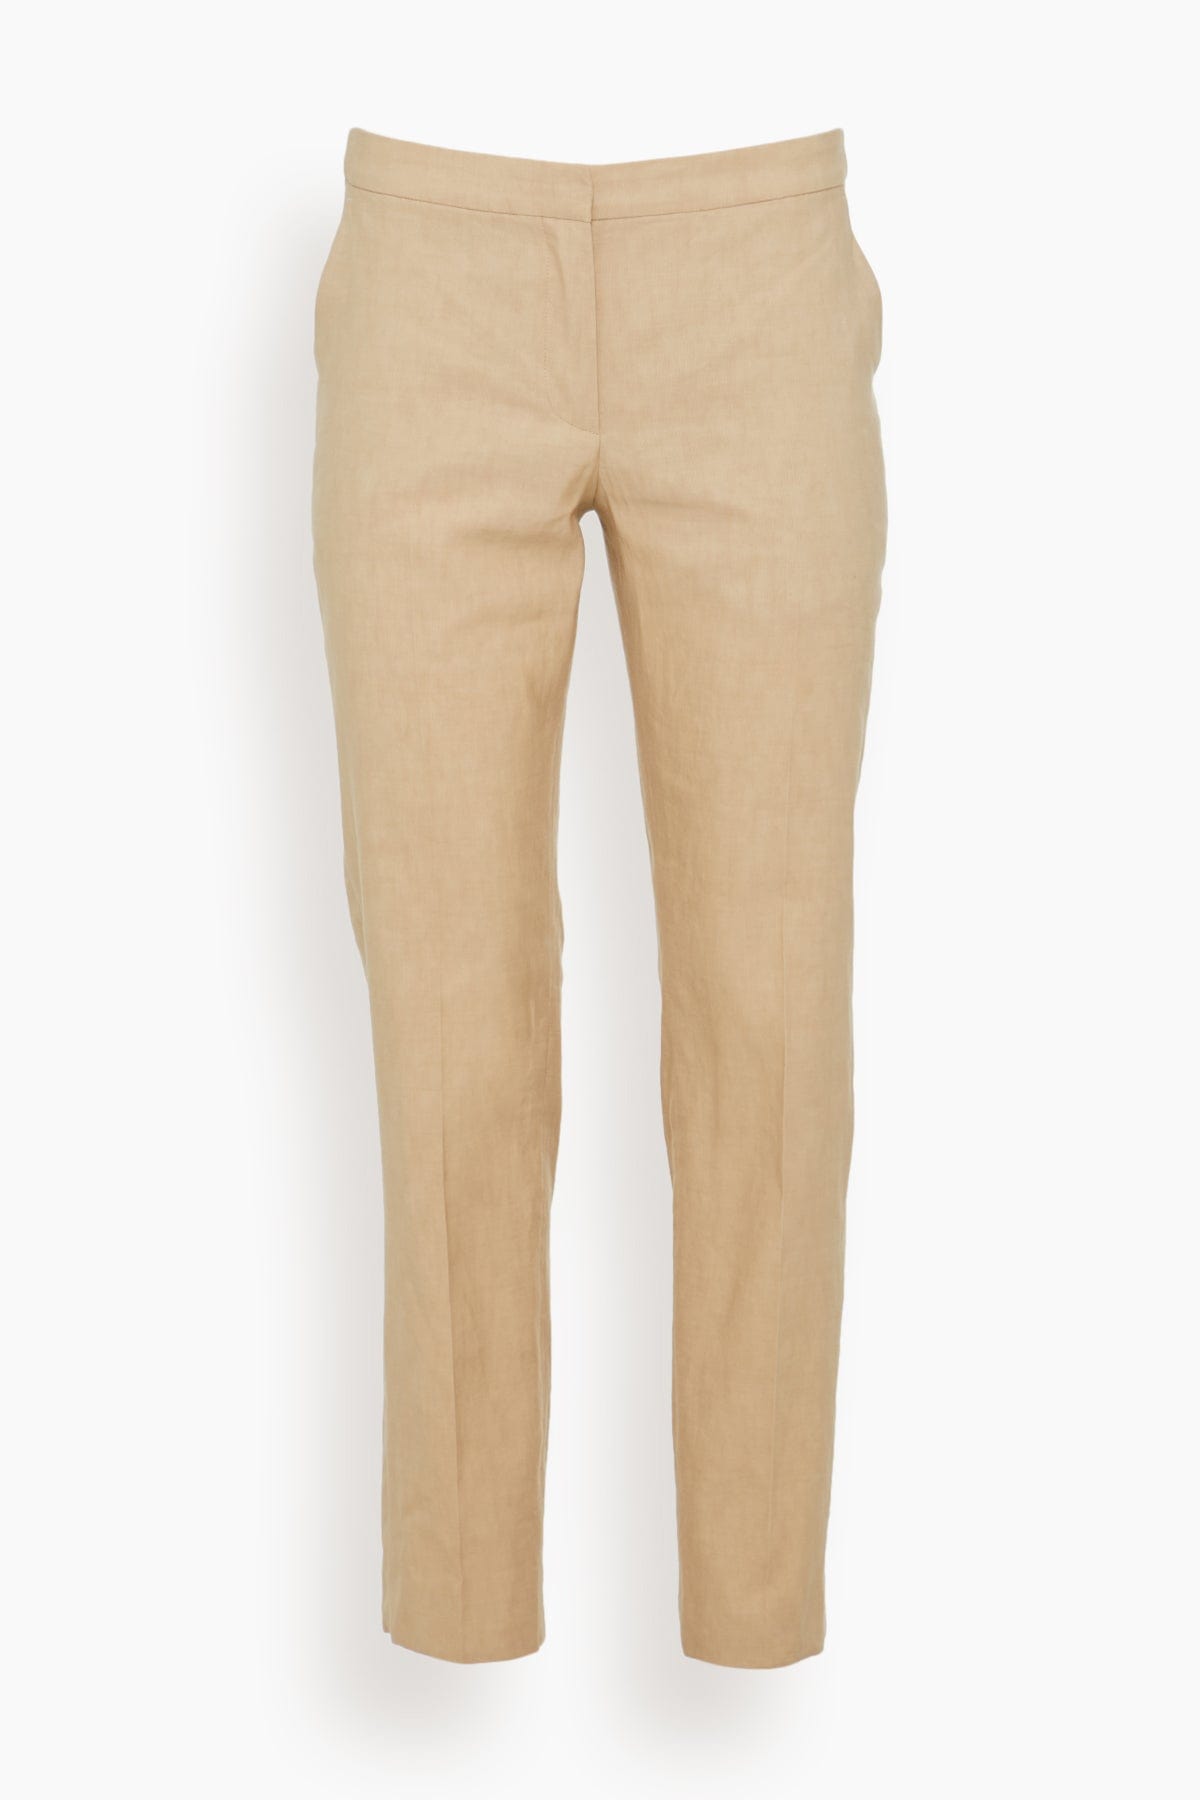 Dries Van Noten Poumas Pants in Cream - Neutrals - Size: 42 / 10 US